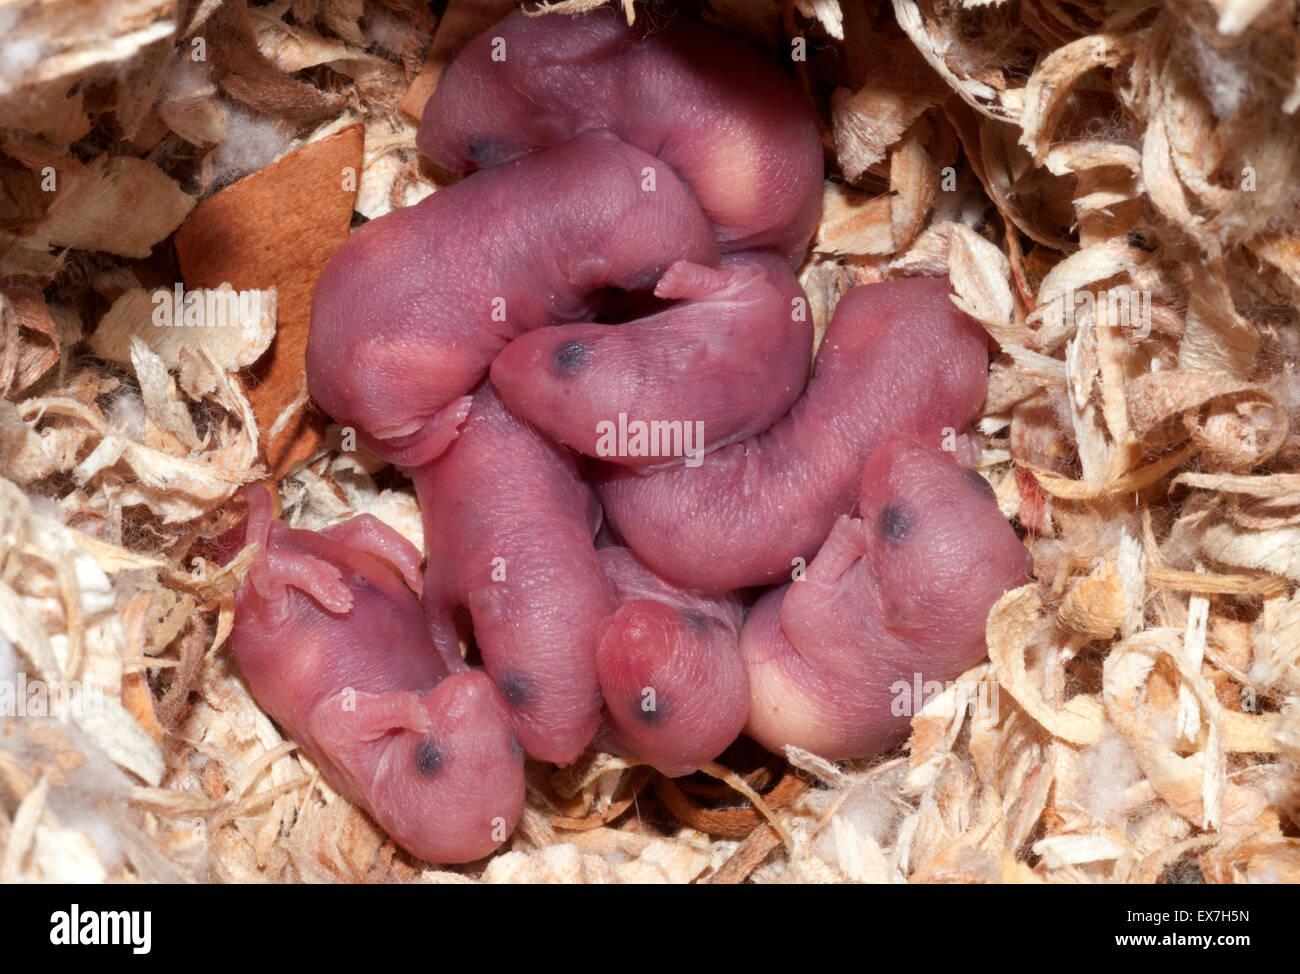 newborn mouse